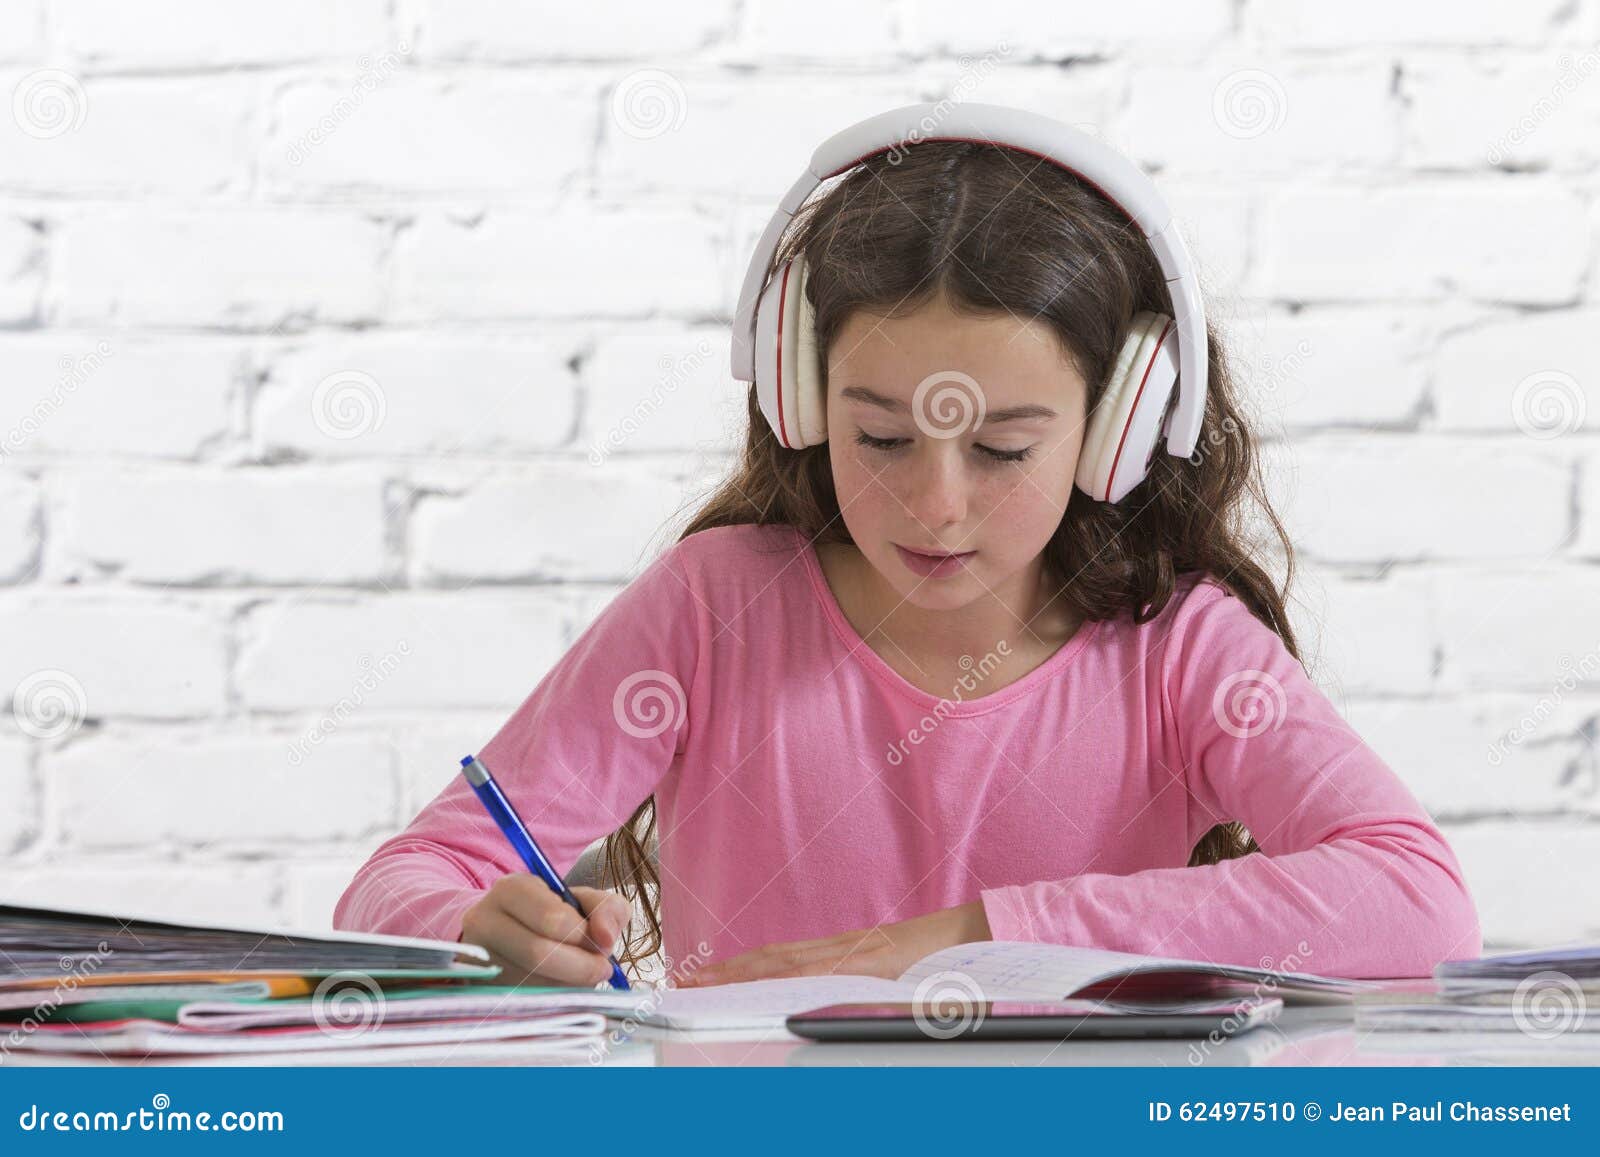 music during homework